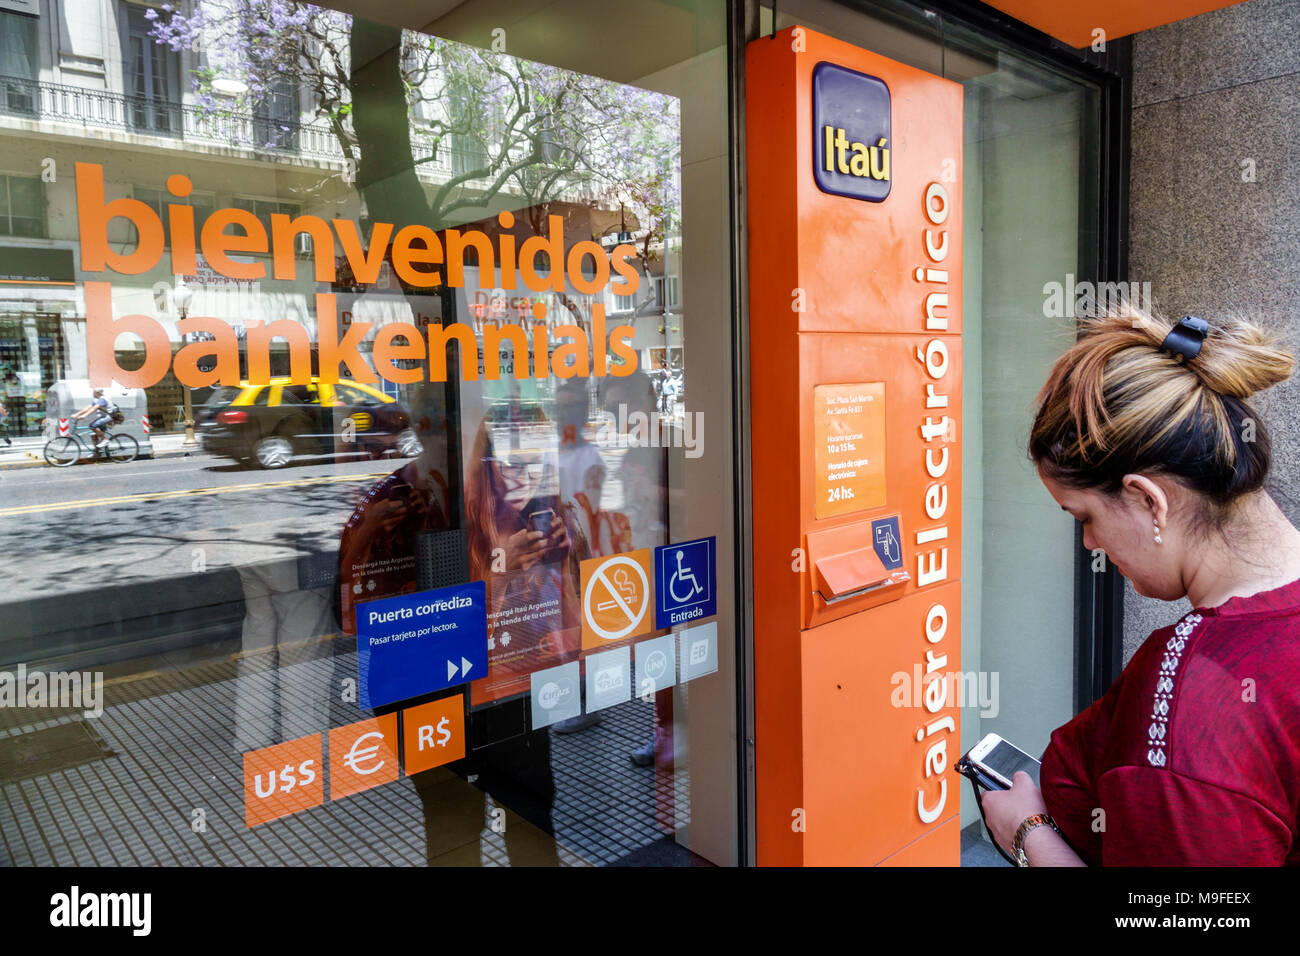 Buenos Aires Argentina,Retiro,Itau Bank,woman female women,ATM machine,automatic teller,cash,entrance,door,welcome sign,Hispanic,ARG171128167 Stock Photo